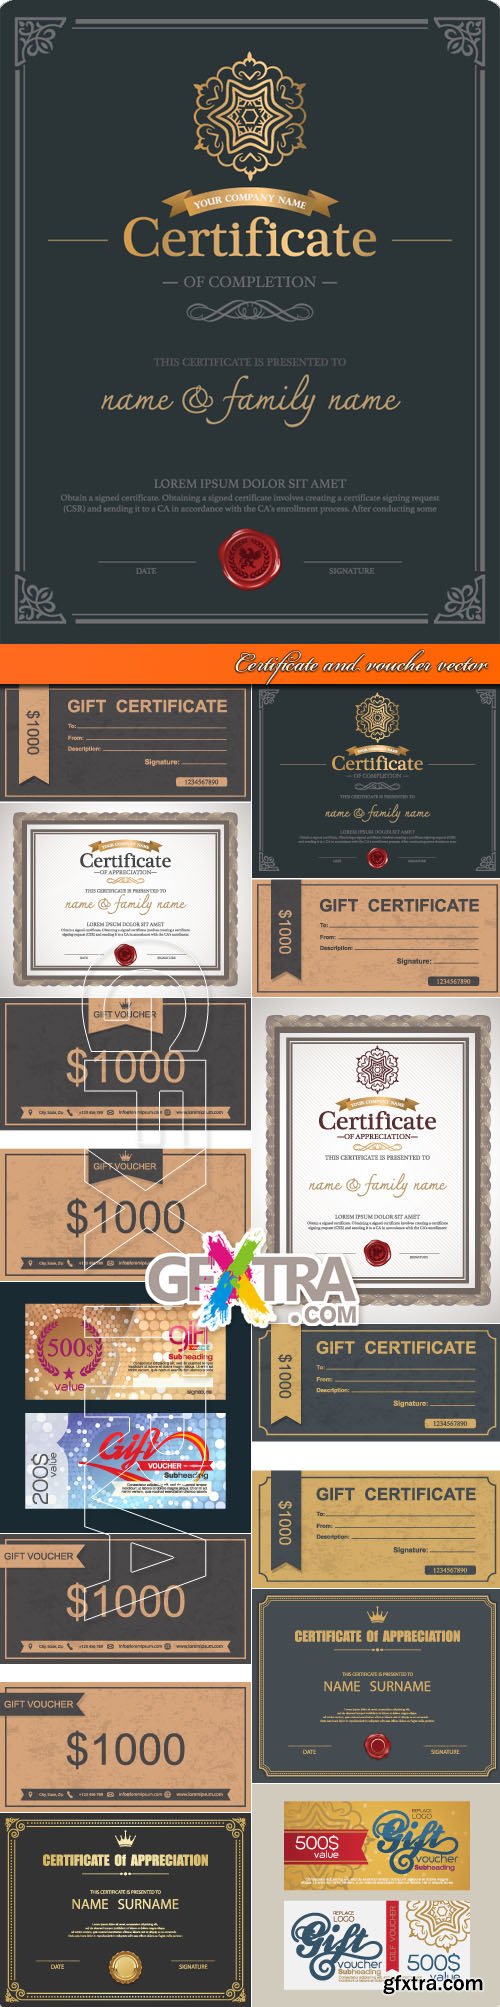 Certificate and voucher vector